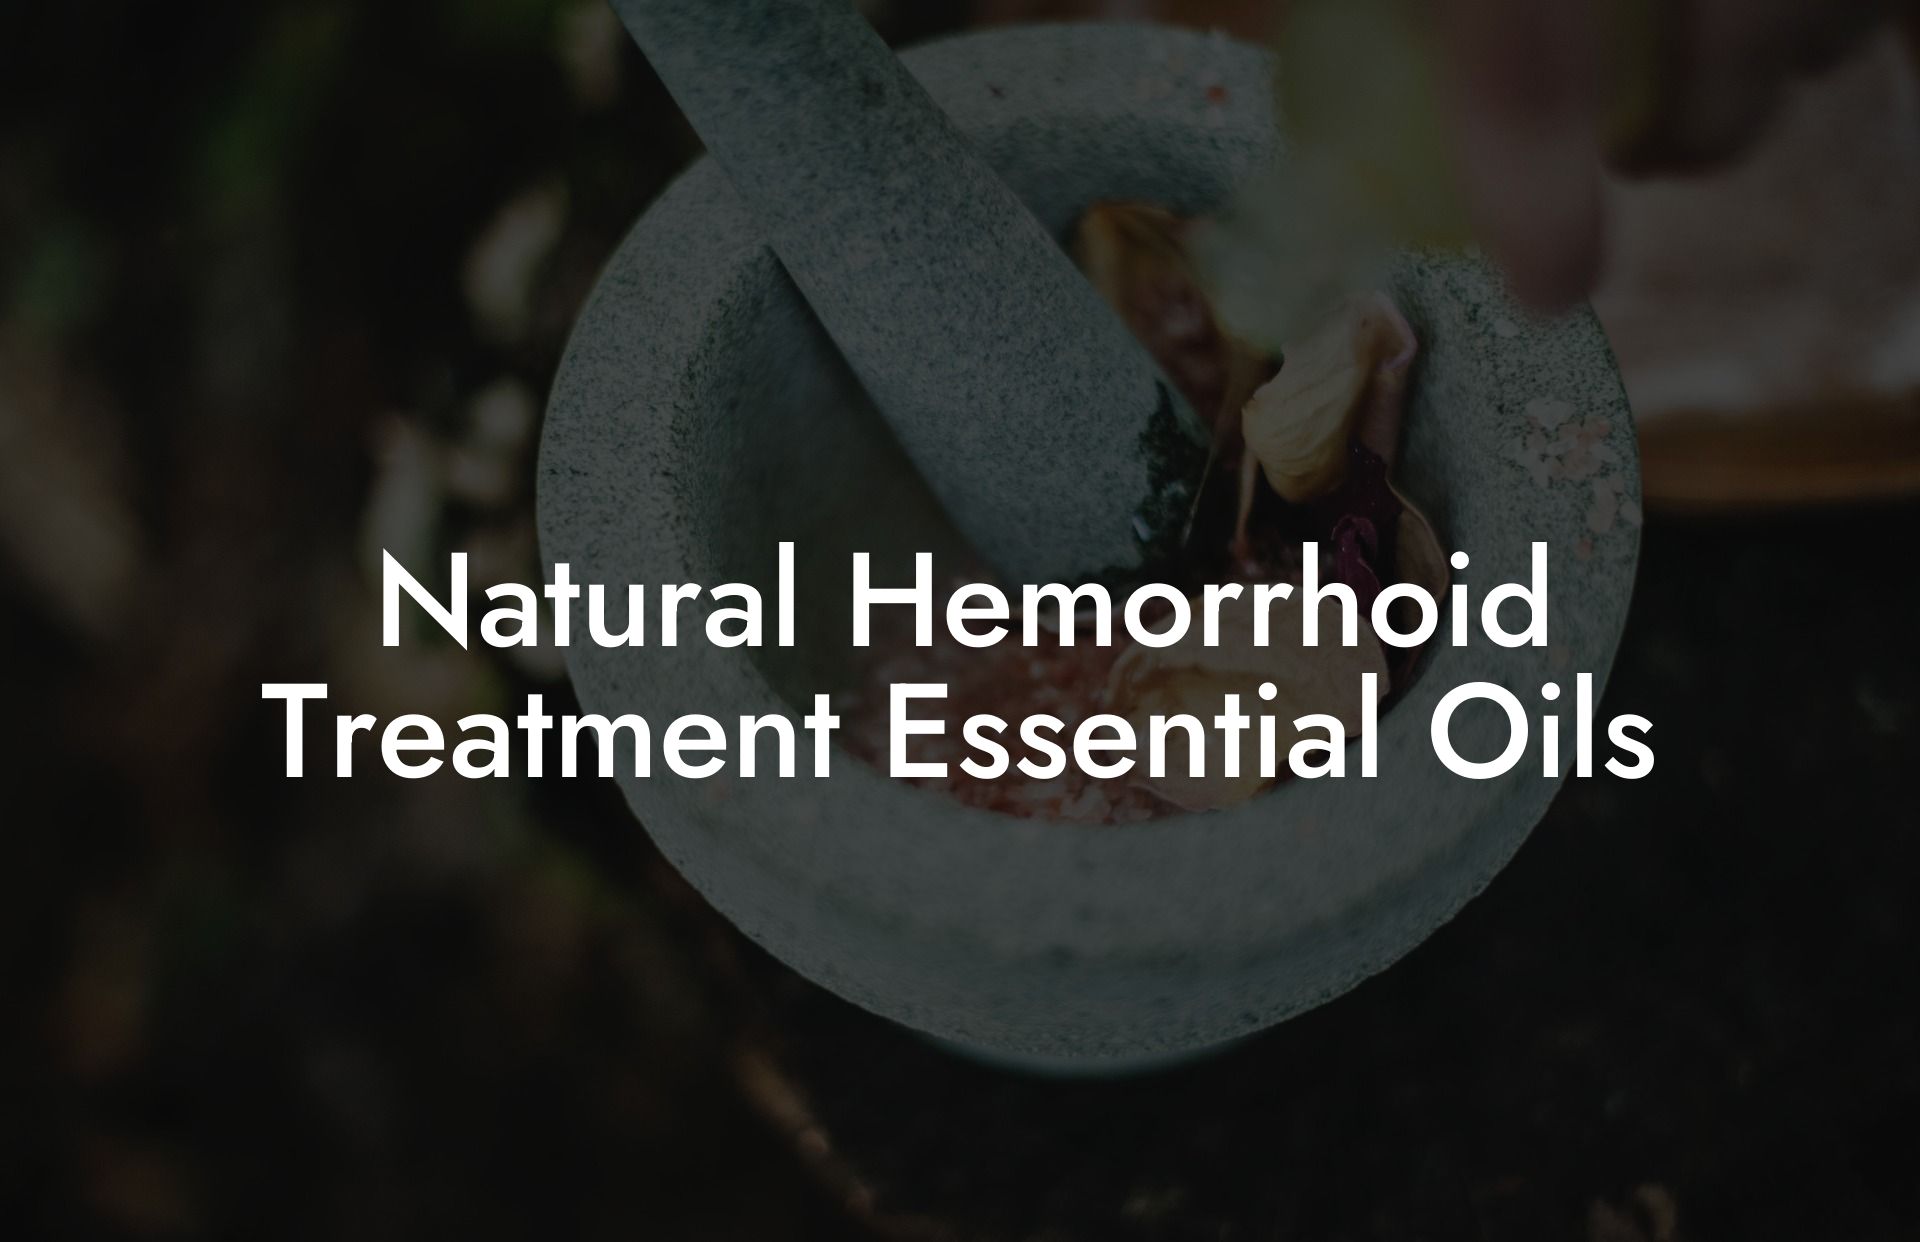 Natural Hemorrhoid Treatment Essential Oils